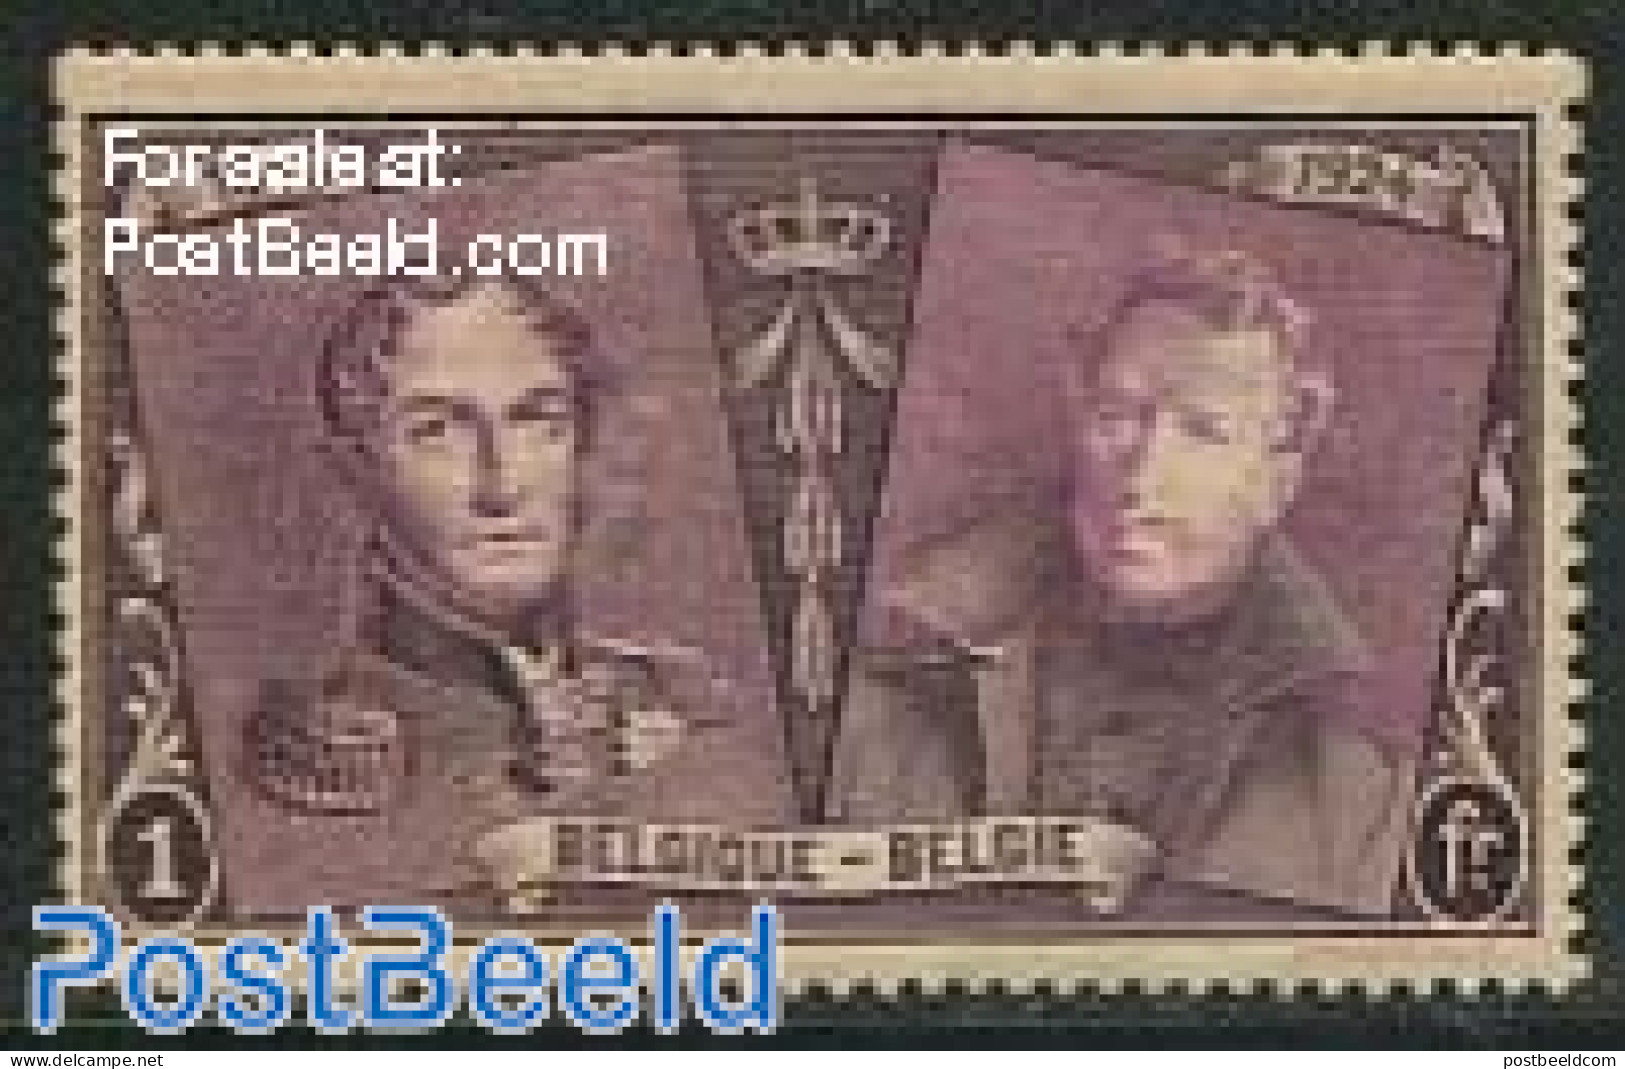 Belgium 1925 1Fr, Stamp Out Of Set, Unused (hinged) - Neufs